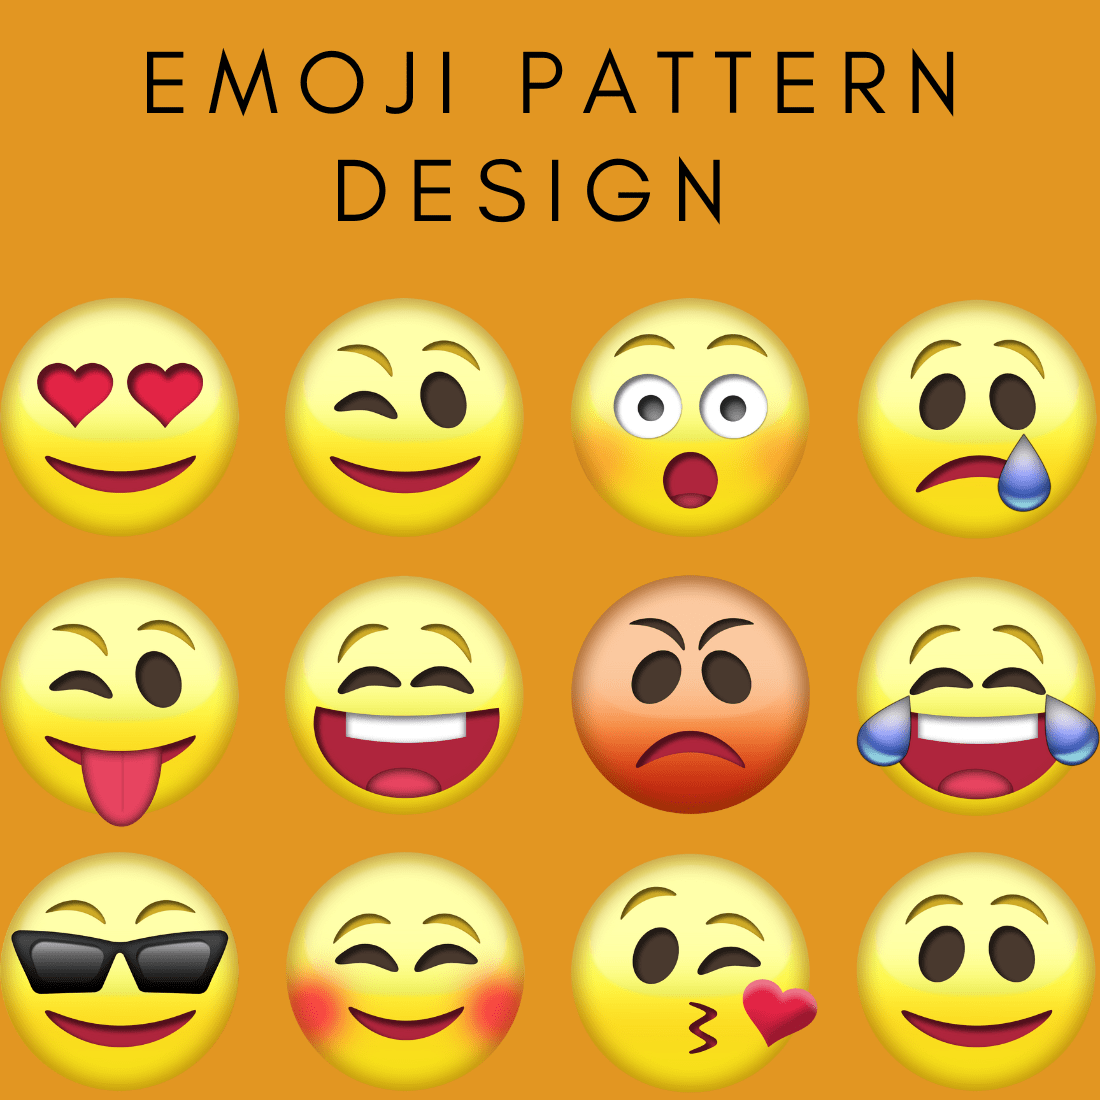 Emoji Pattern Design Bundle facebook image.